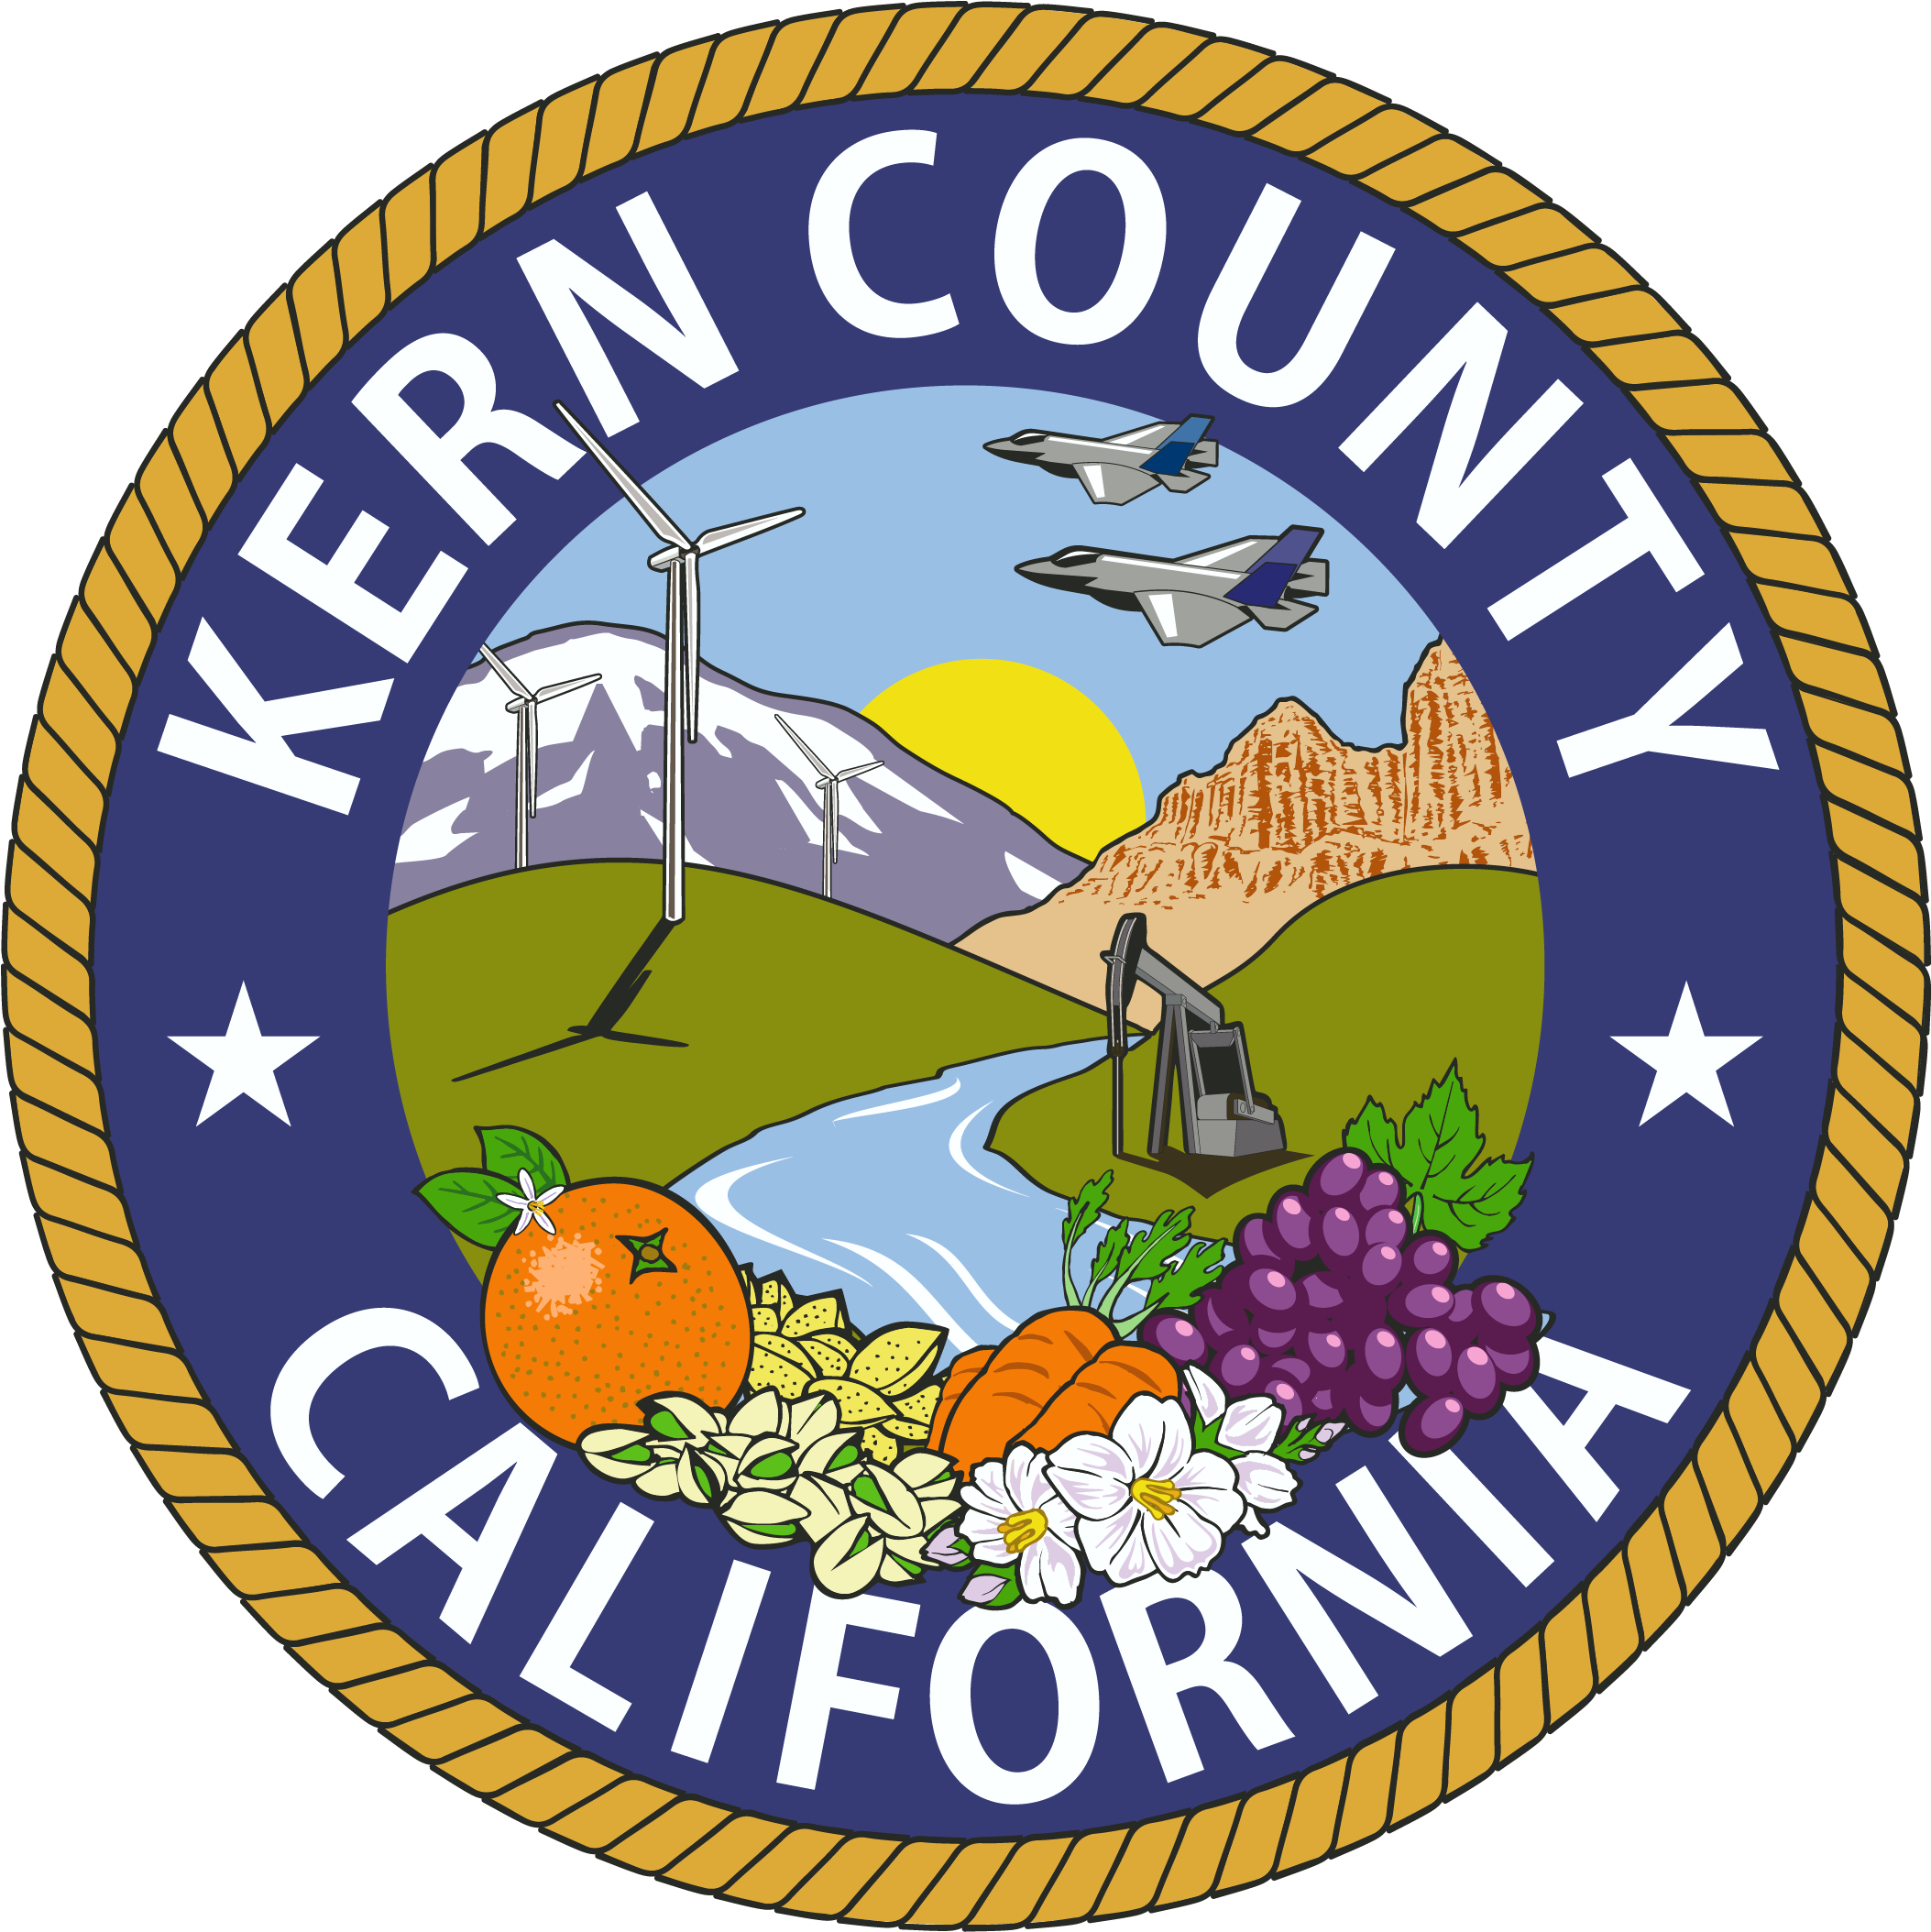 Kern County Seal - Kern County Seal (2250x2250)